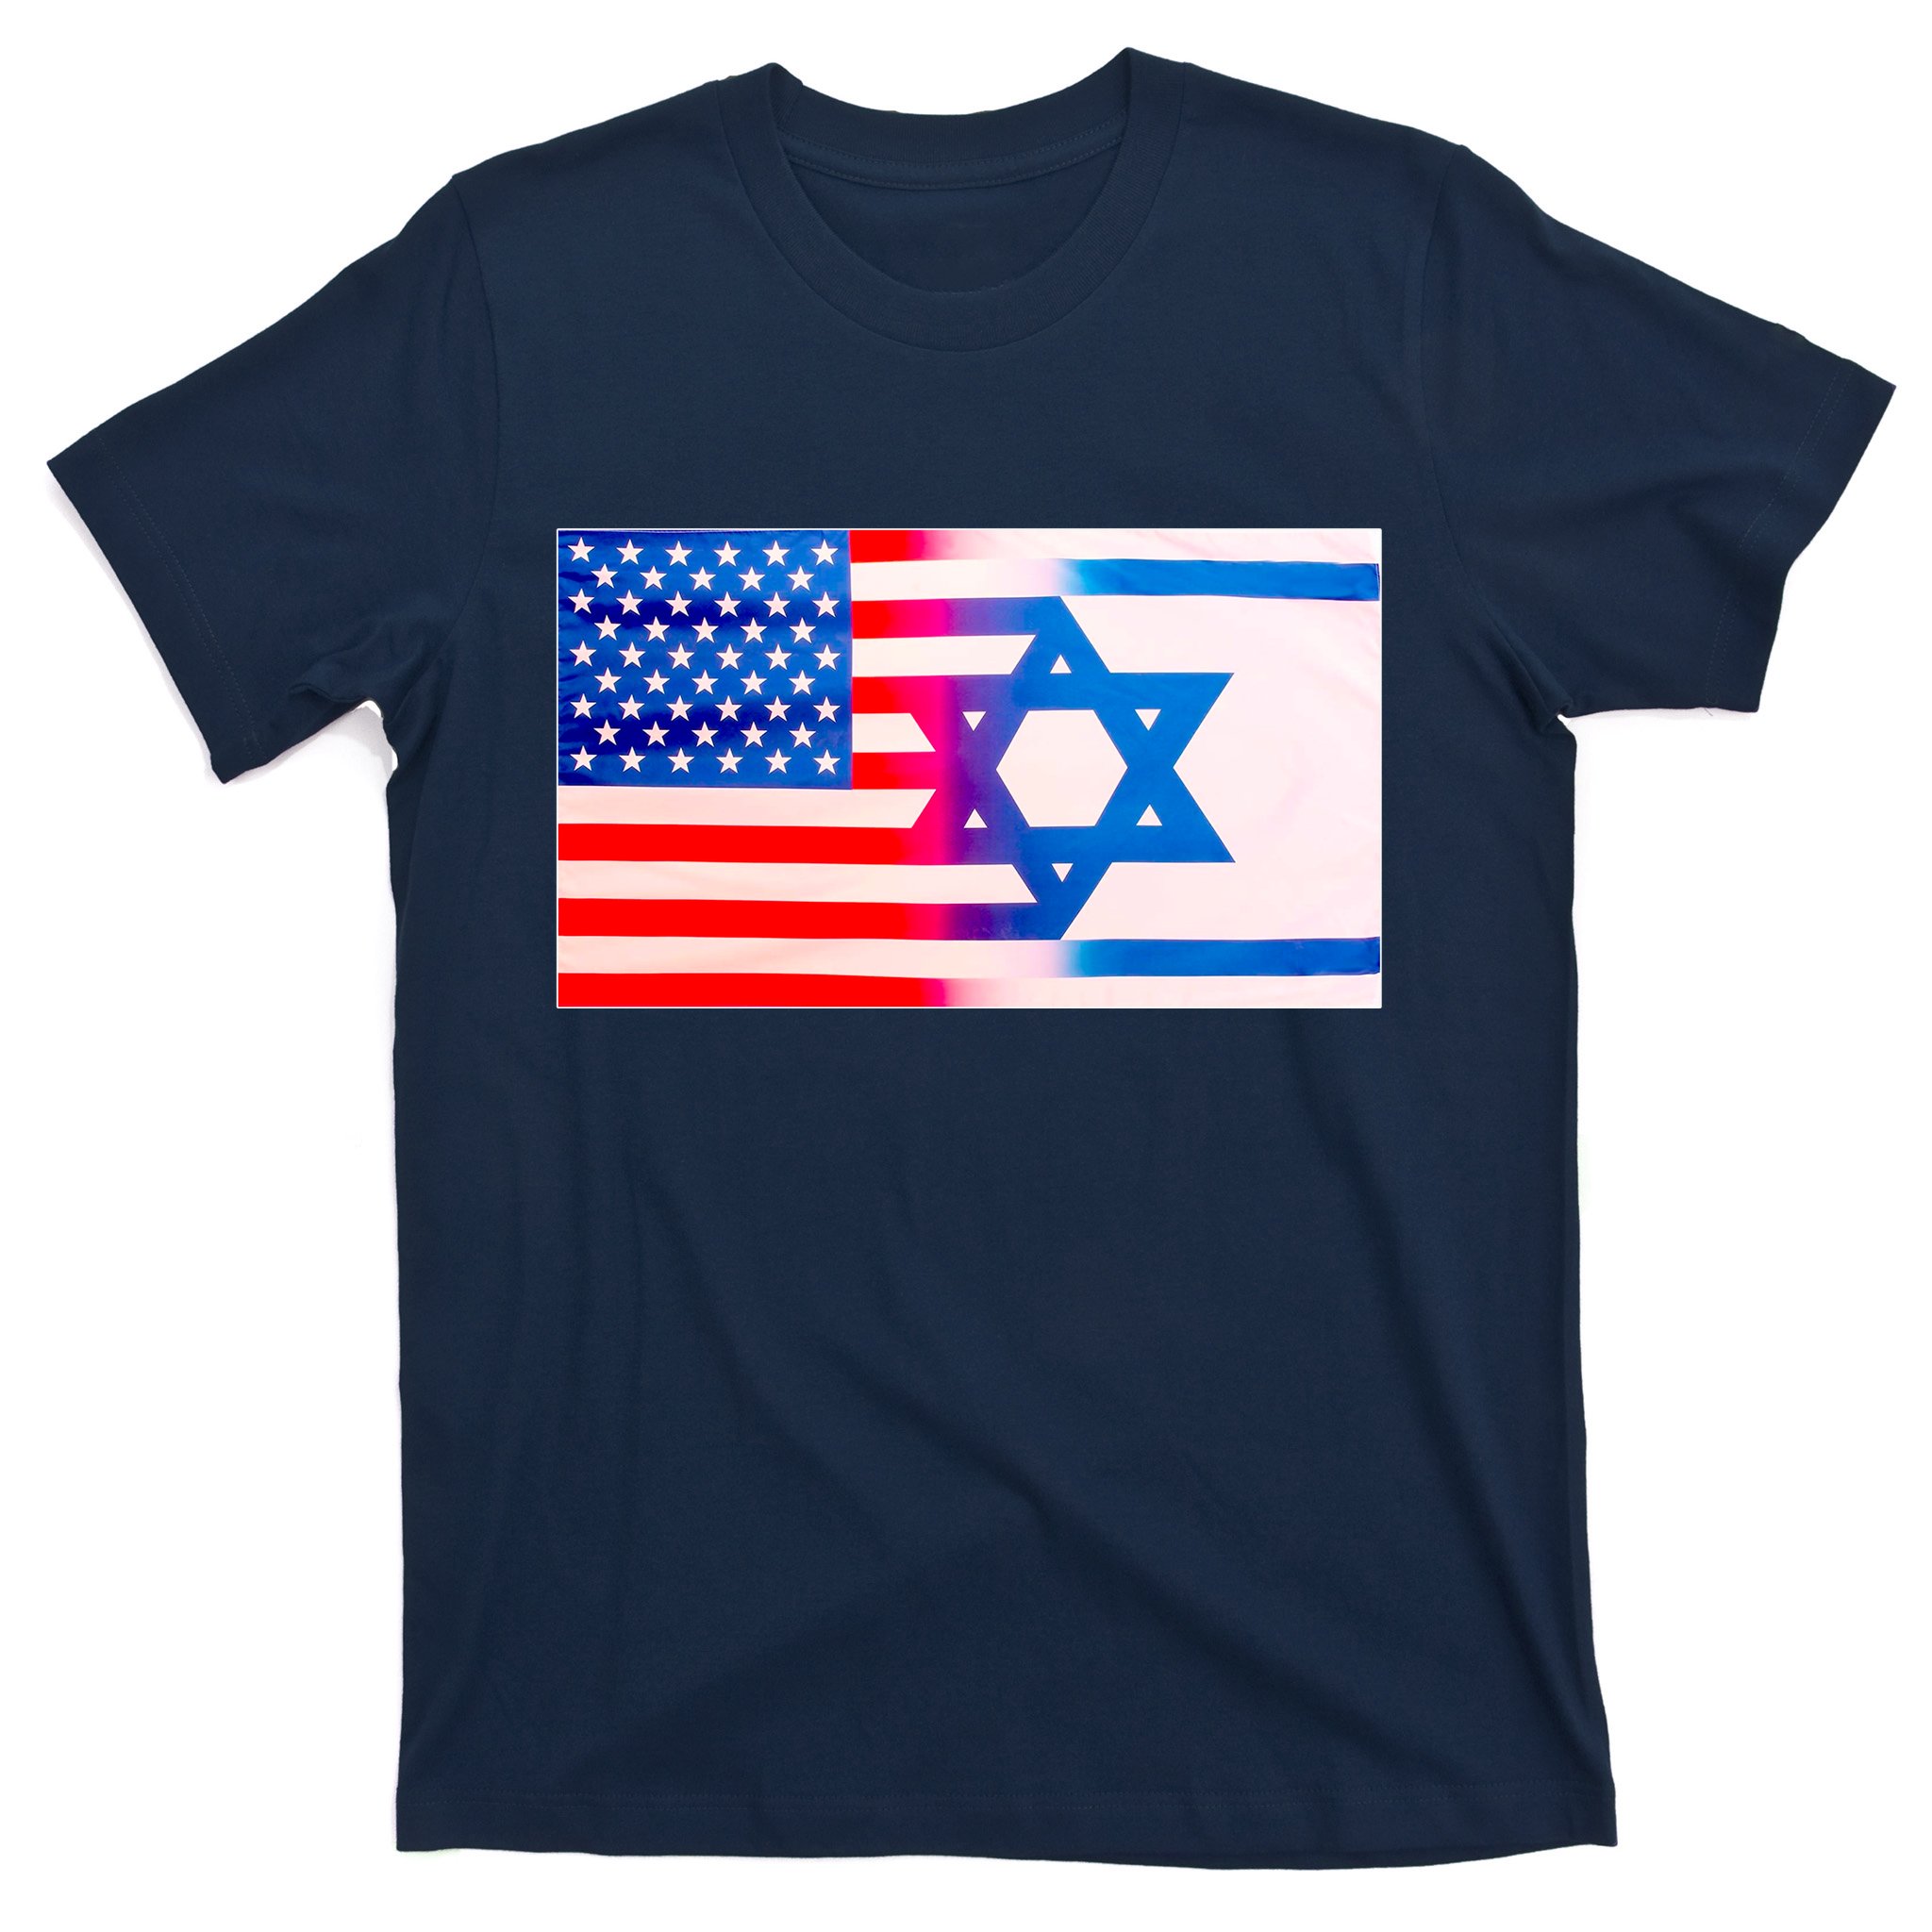 Israel Flag Shaped Unisex Sweatshirt Long Sleeve Hooded Pullover